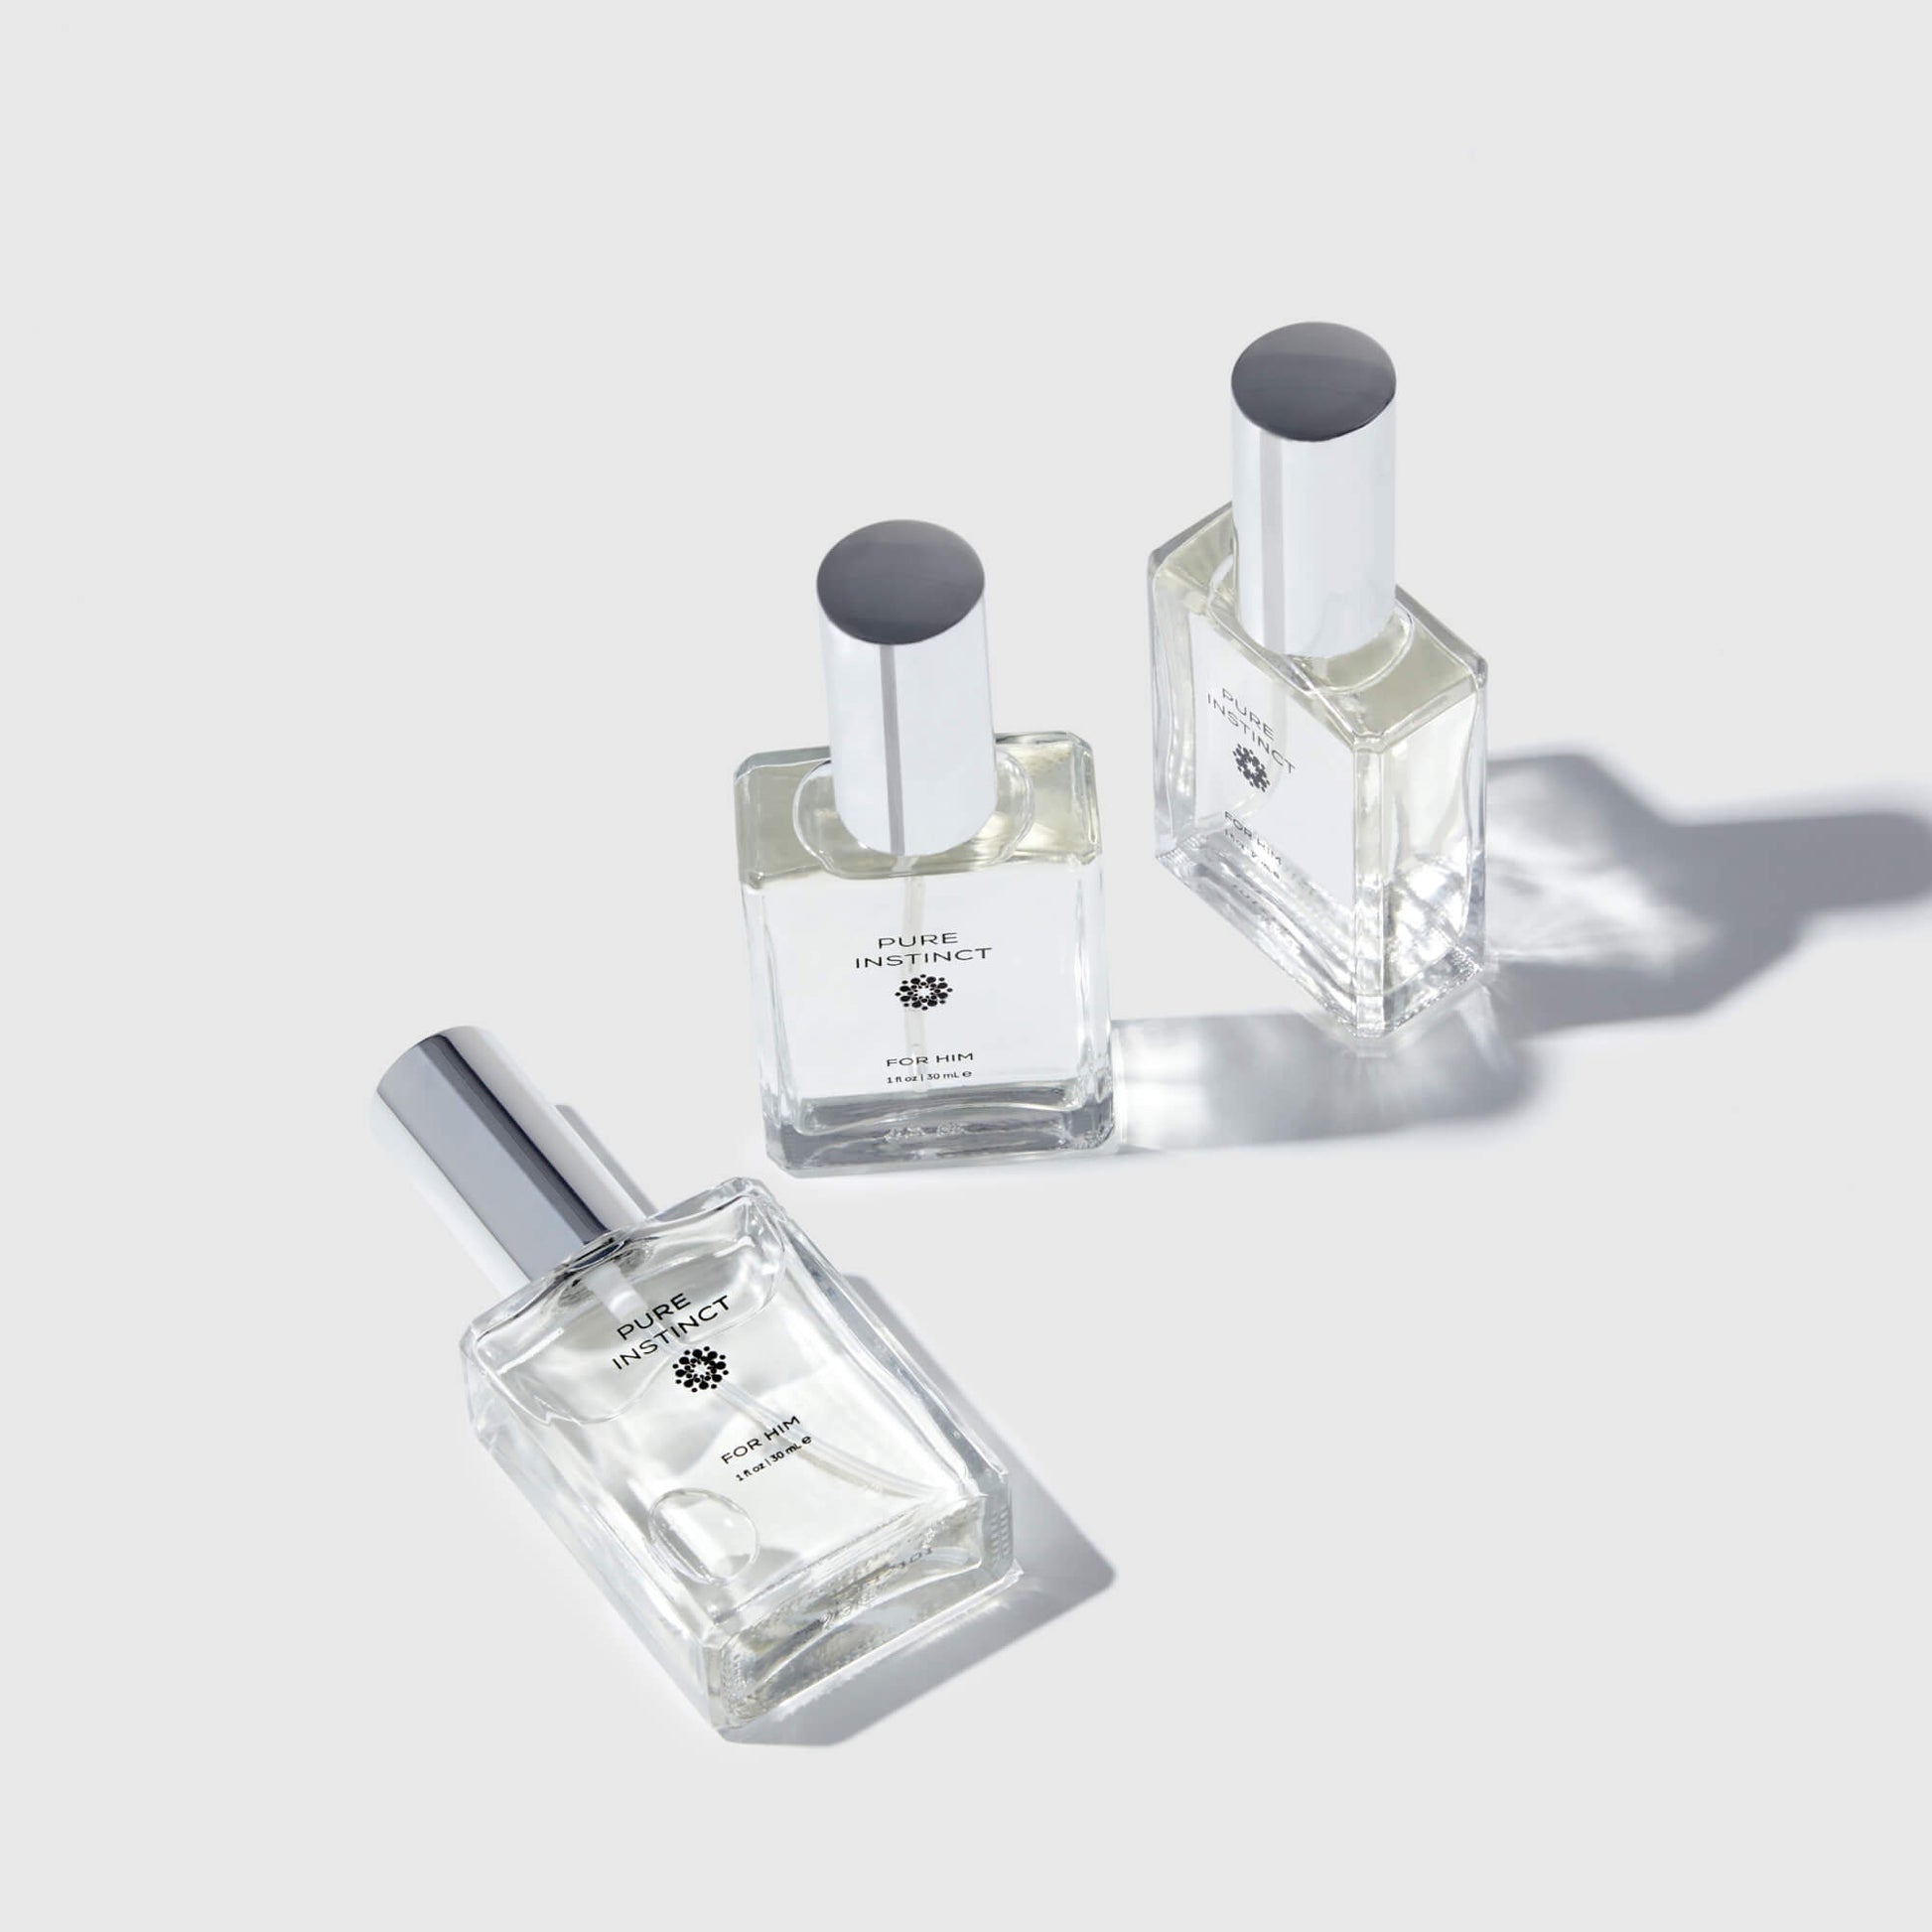 Pheromone Perfume & Cologne